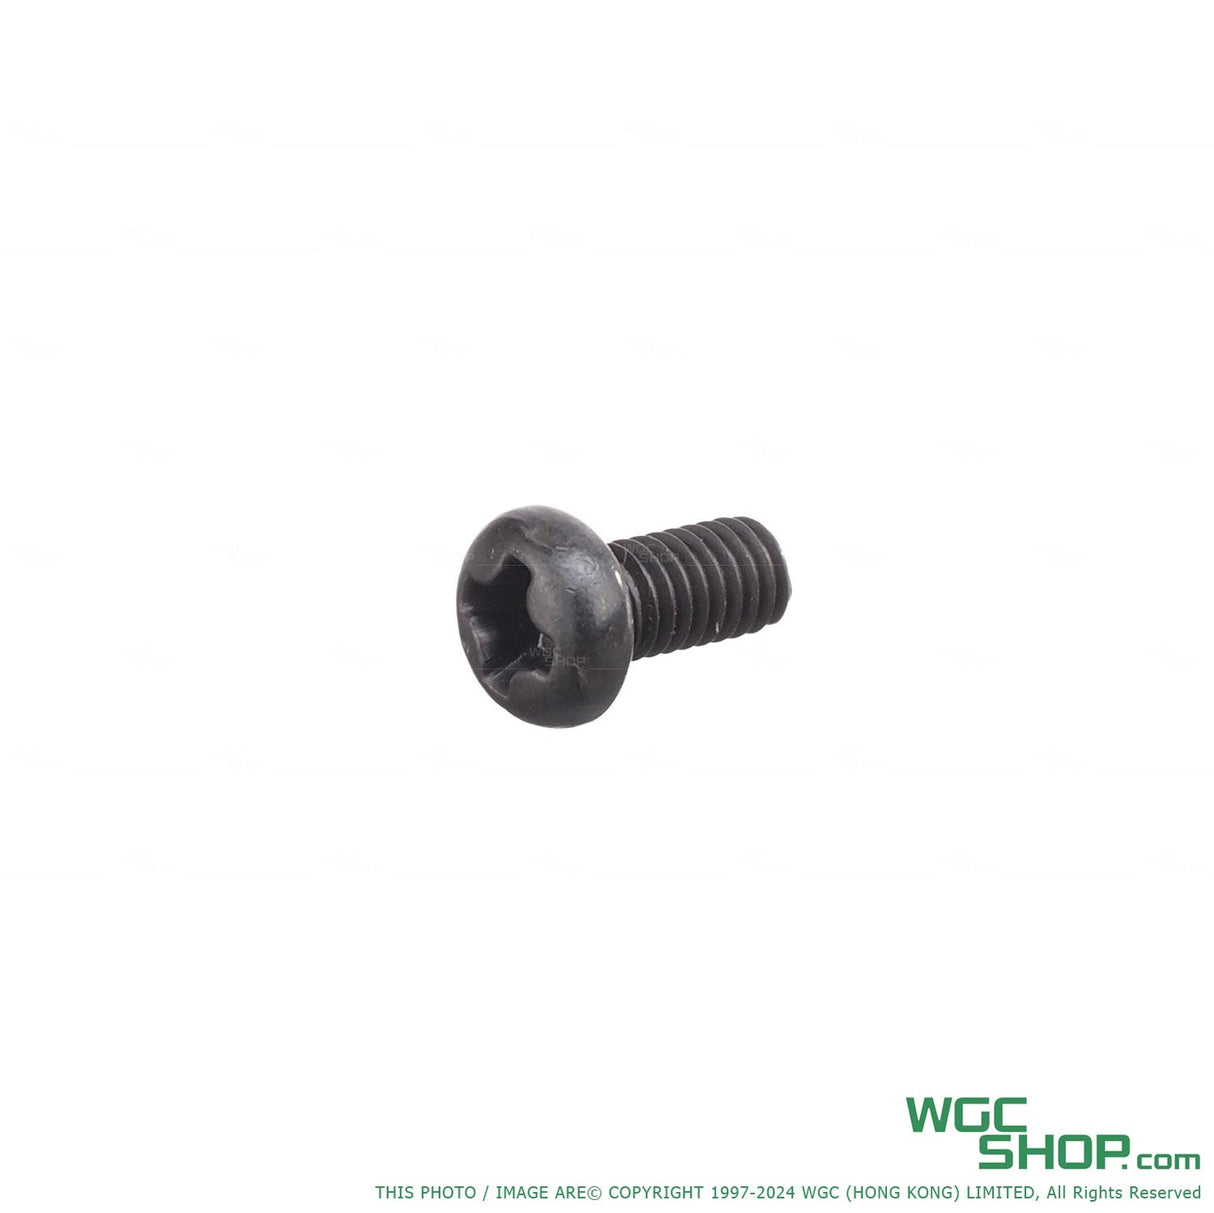 VFC Original Parts - MK25 GBB Screw M3x6 ( PSCW030621 / 01-08 )